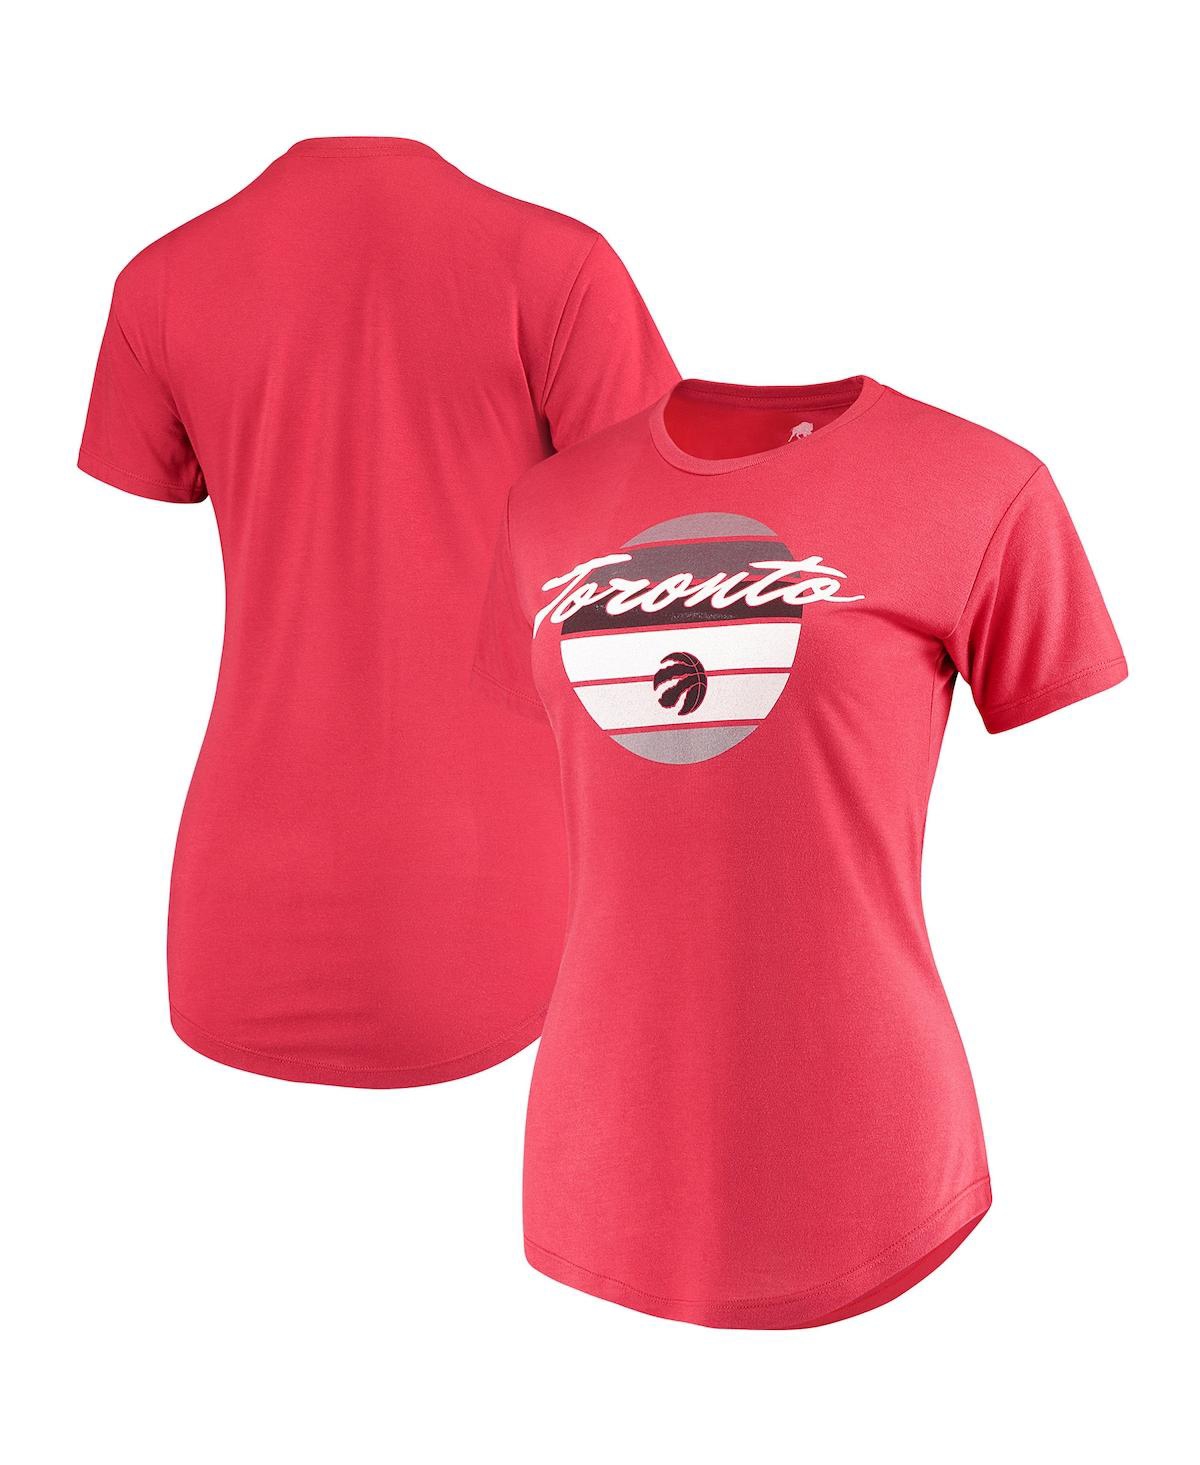 Shop Sportiqe Women's  Red Toronto Raptors Phoebe Super Soft Tri-blend T-shirt